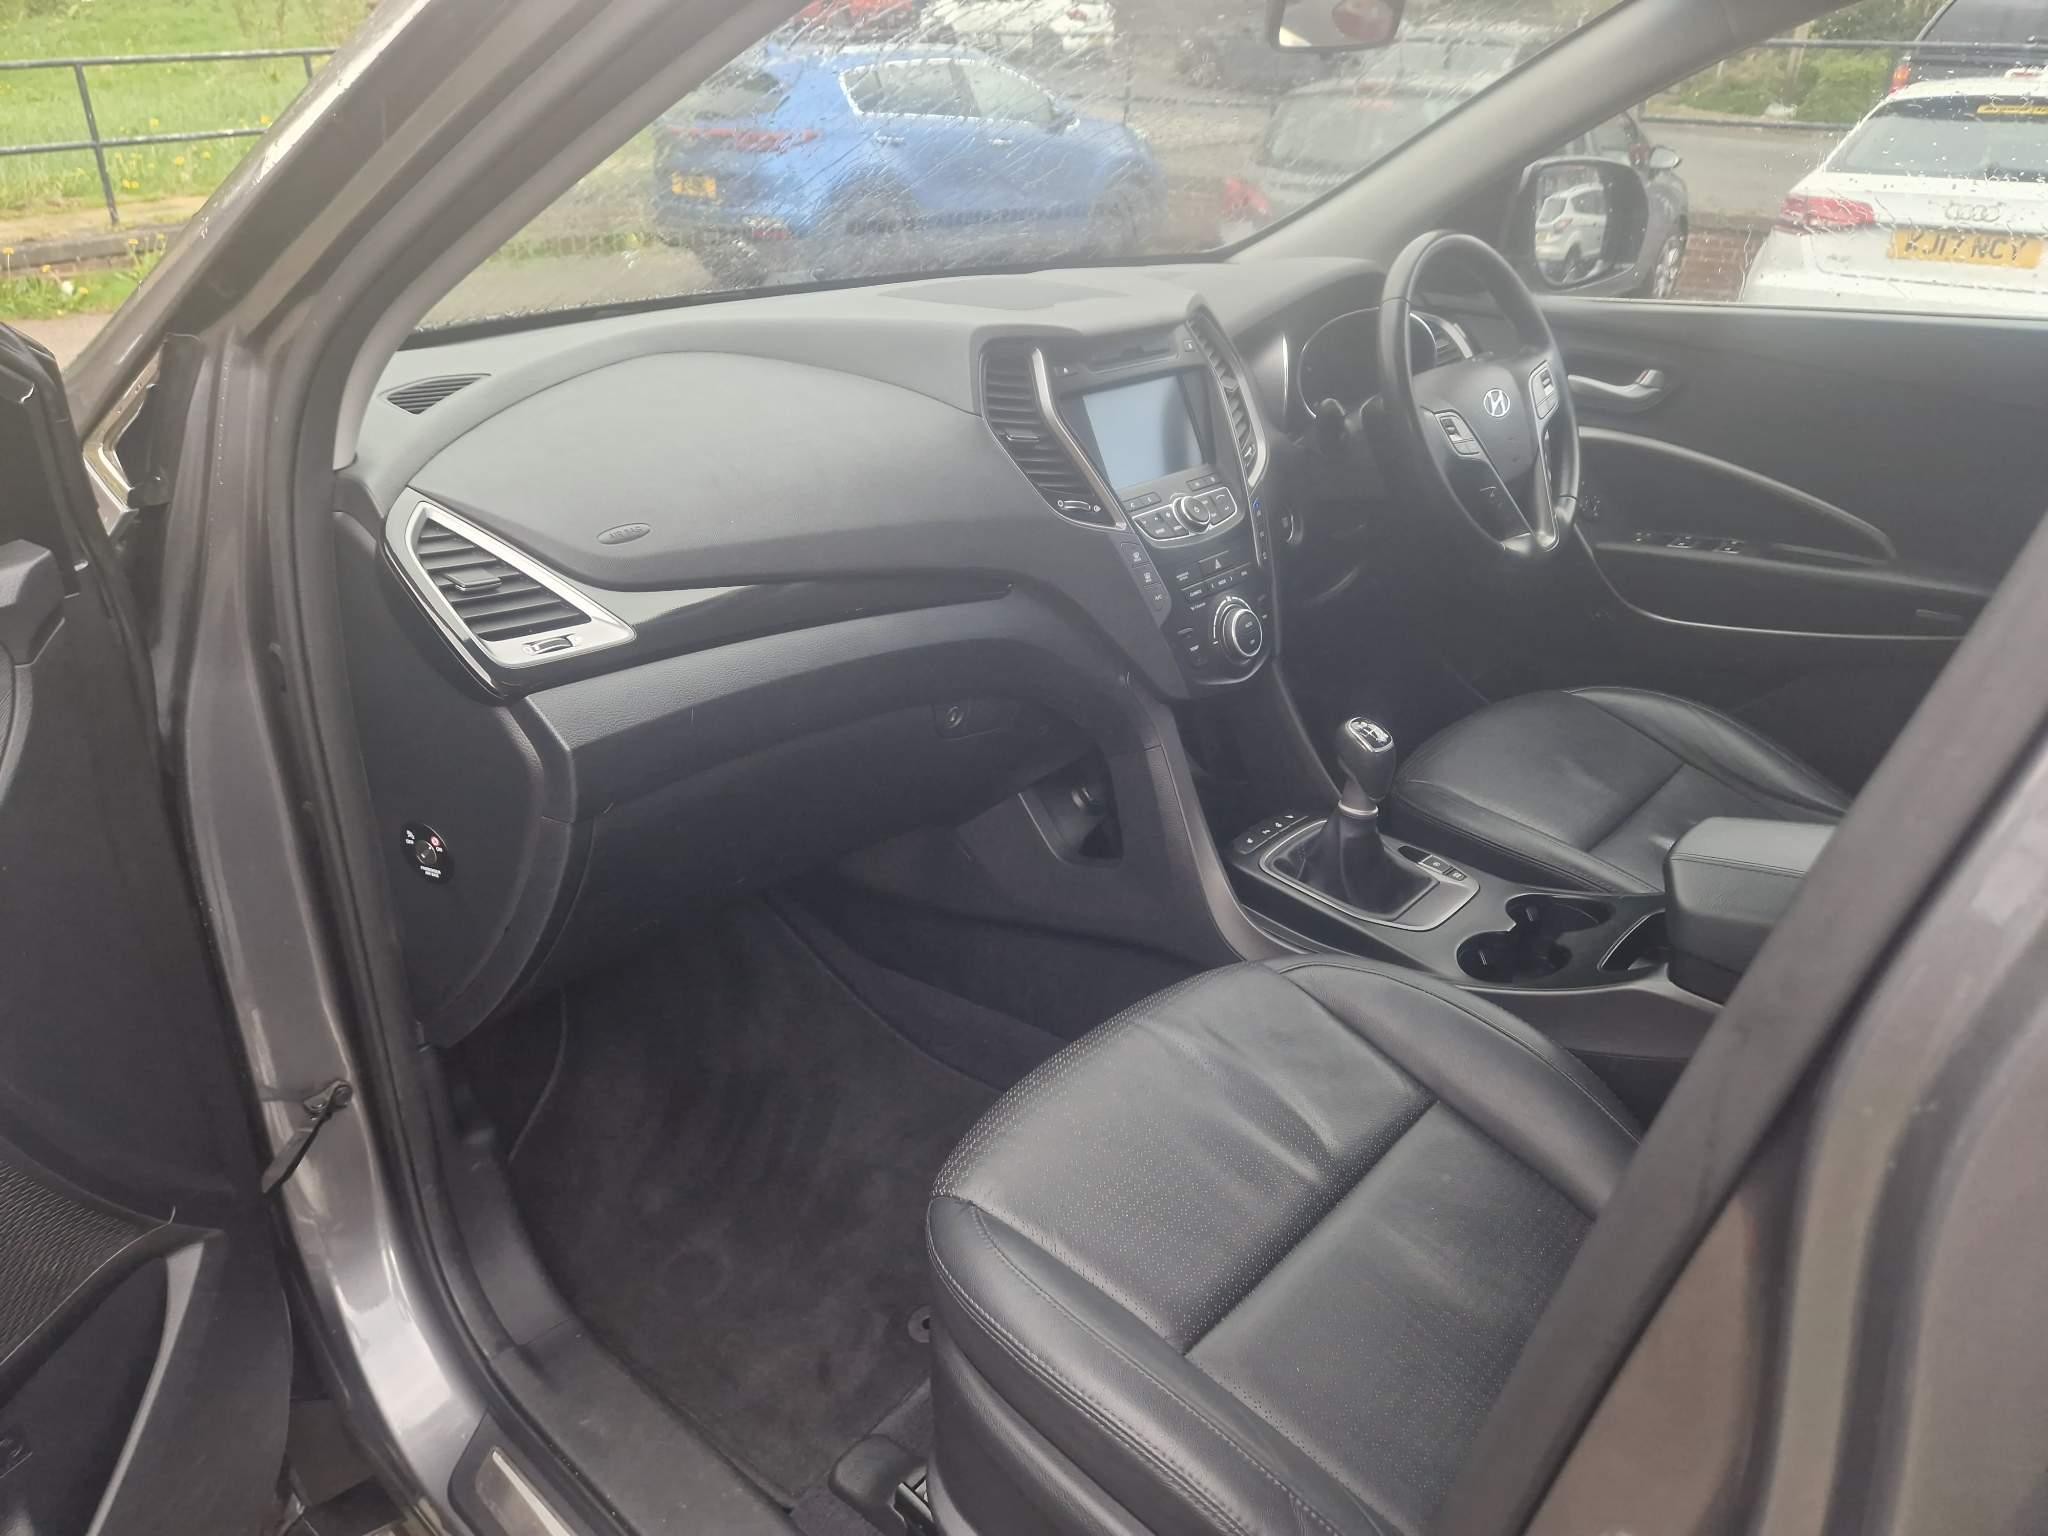 Hyundai SANTA FE 2.2 CRDi Premium SE 4WD Euro 5 5dr (7 seat) (SW14TFN) image 13